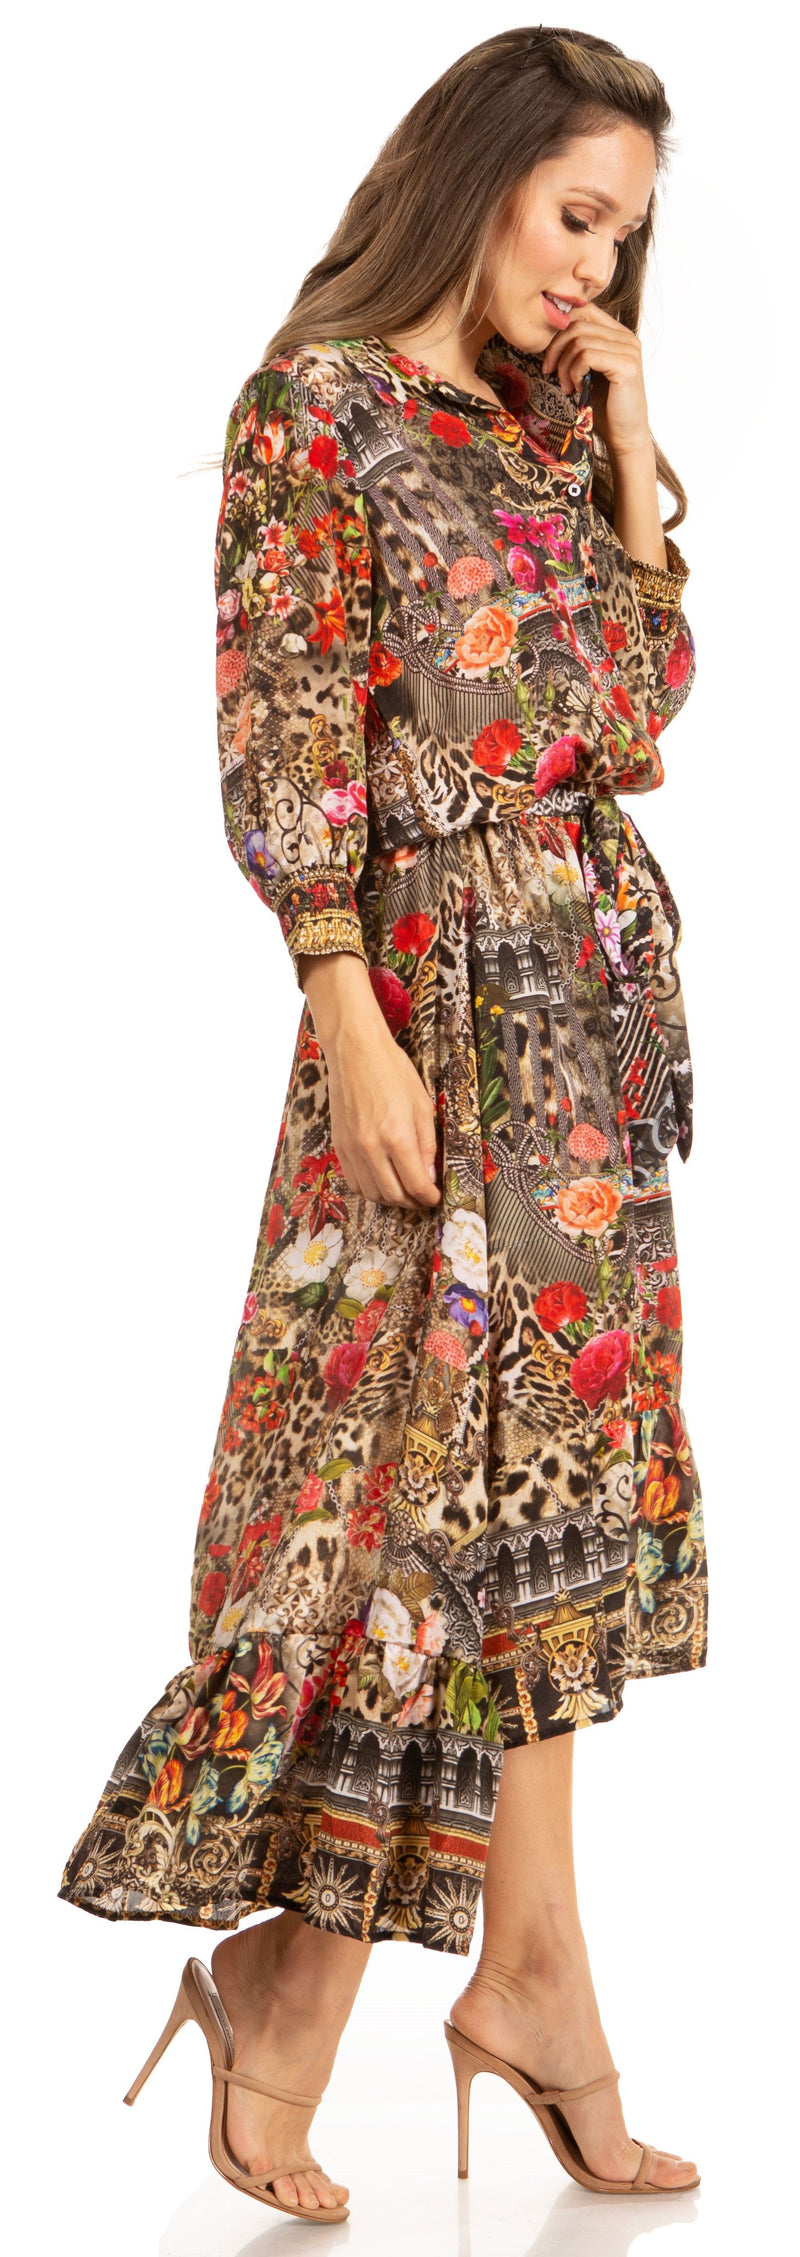 Sakkas Andreas Women's Maxi Long Sleeve Button Down Floral Ruffle Dress Pockets